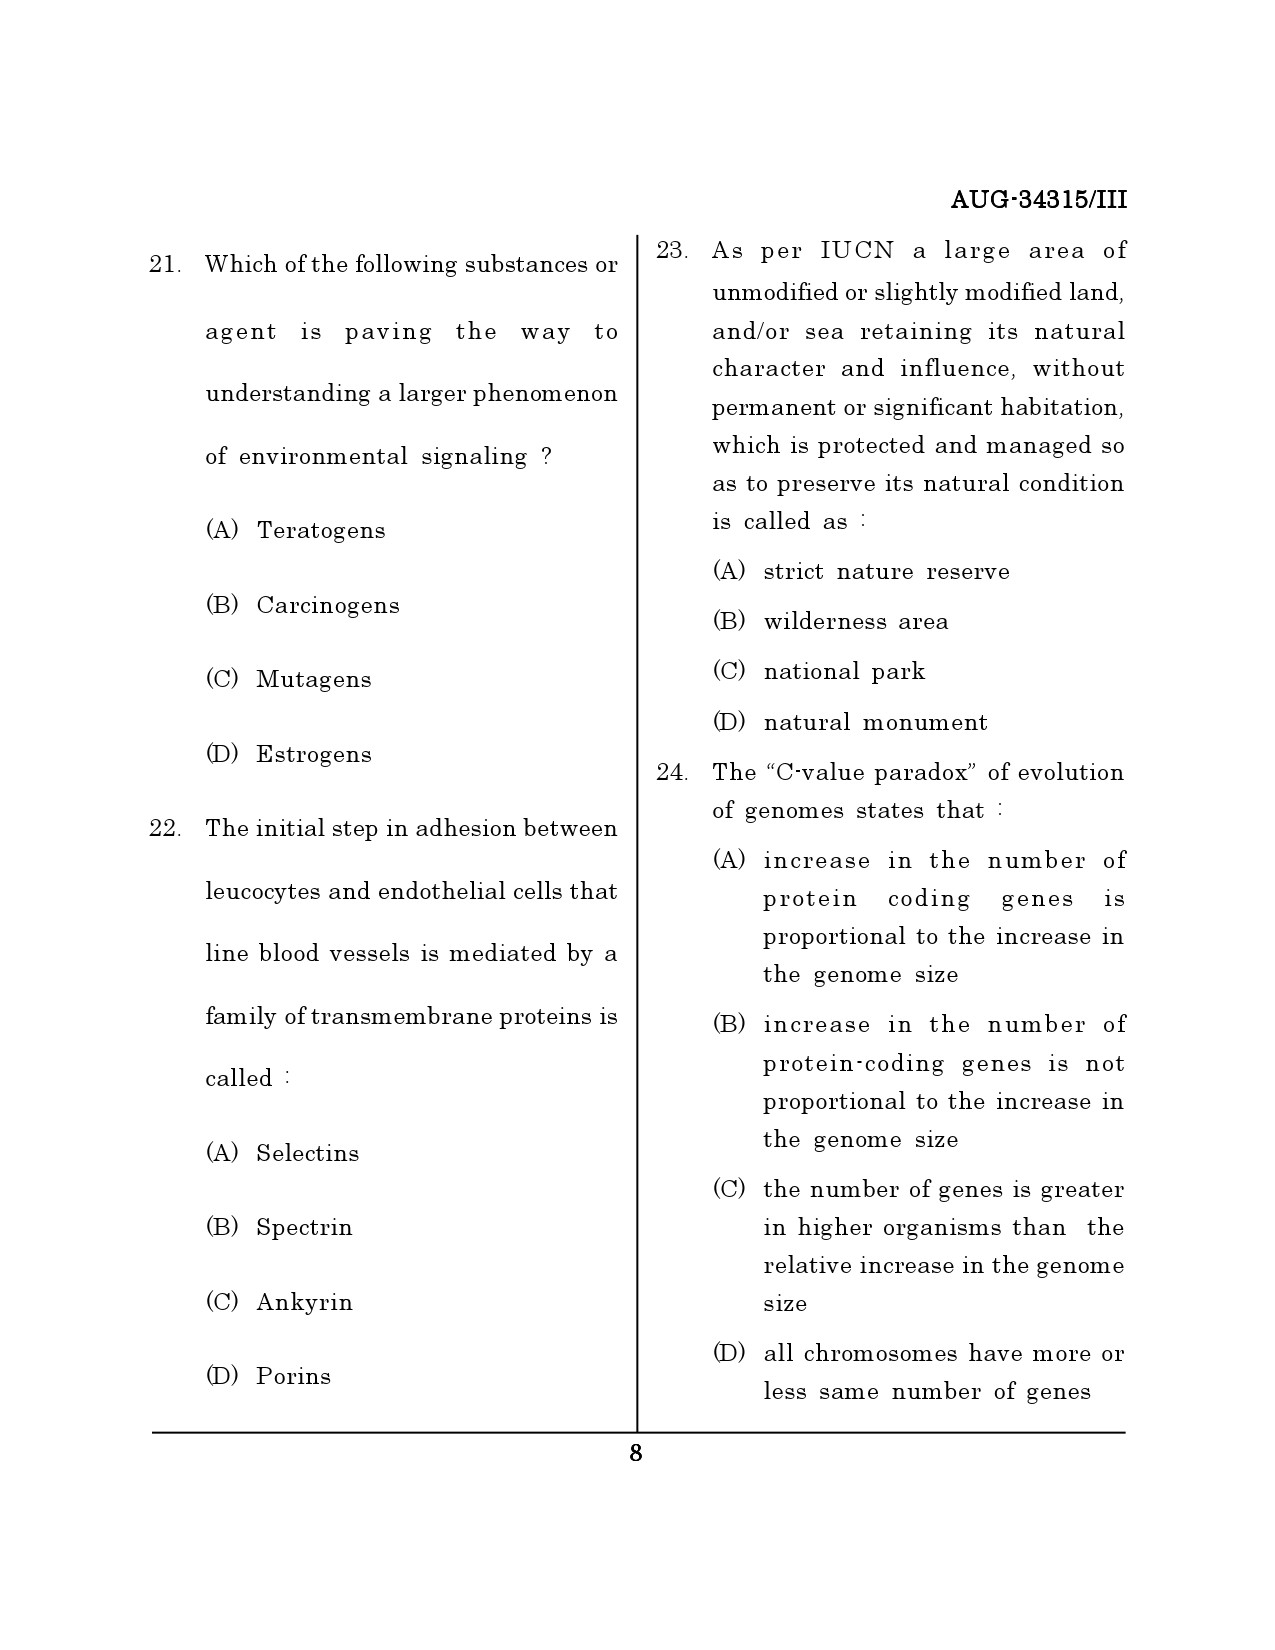 Maharashtra SET Life Sciences Question Paper III August 2015 7